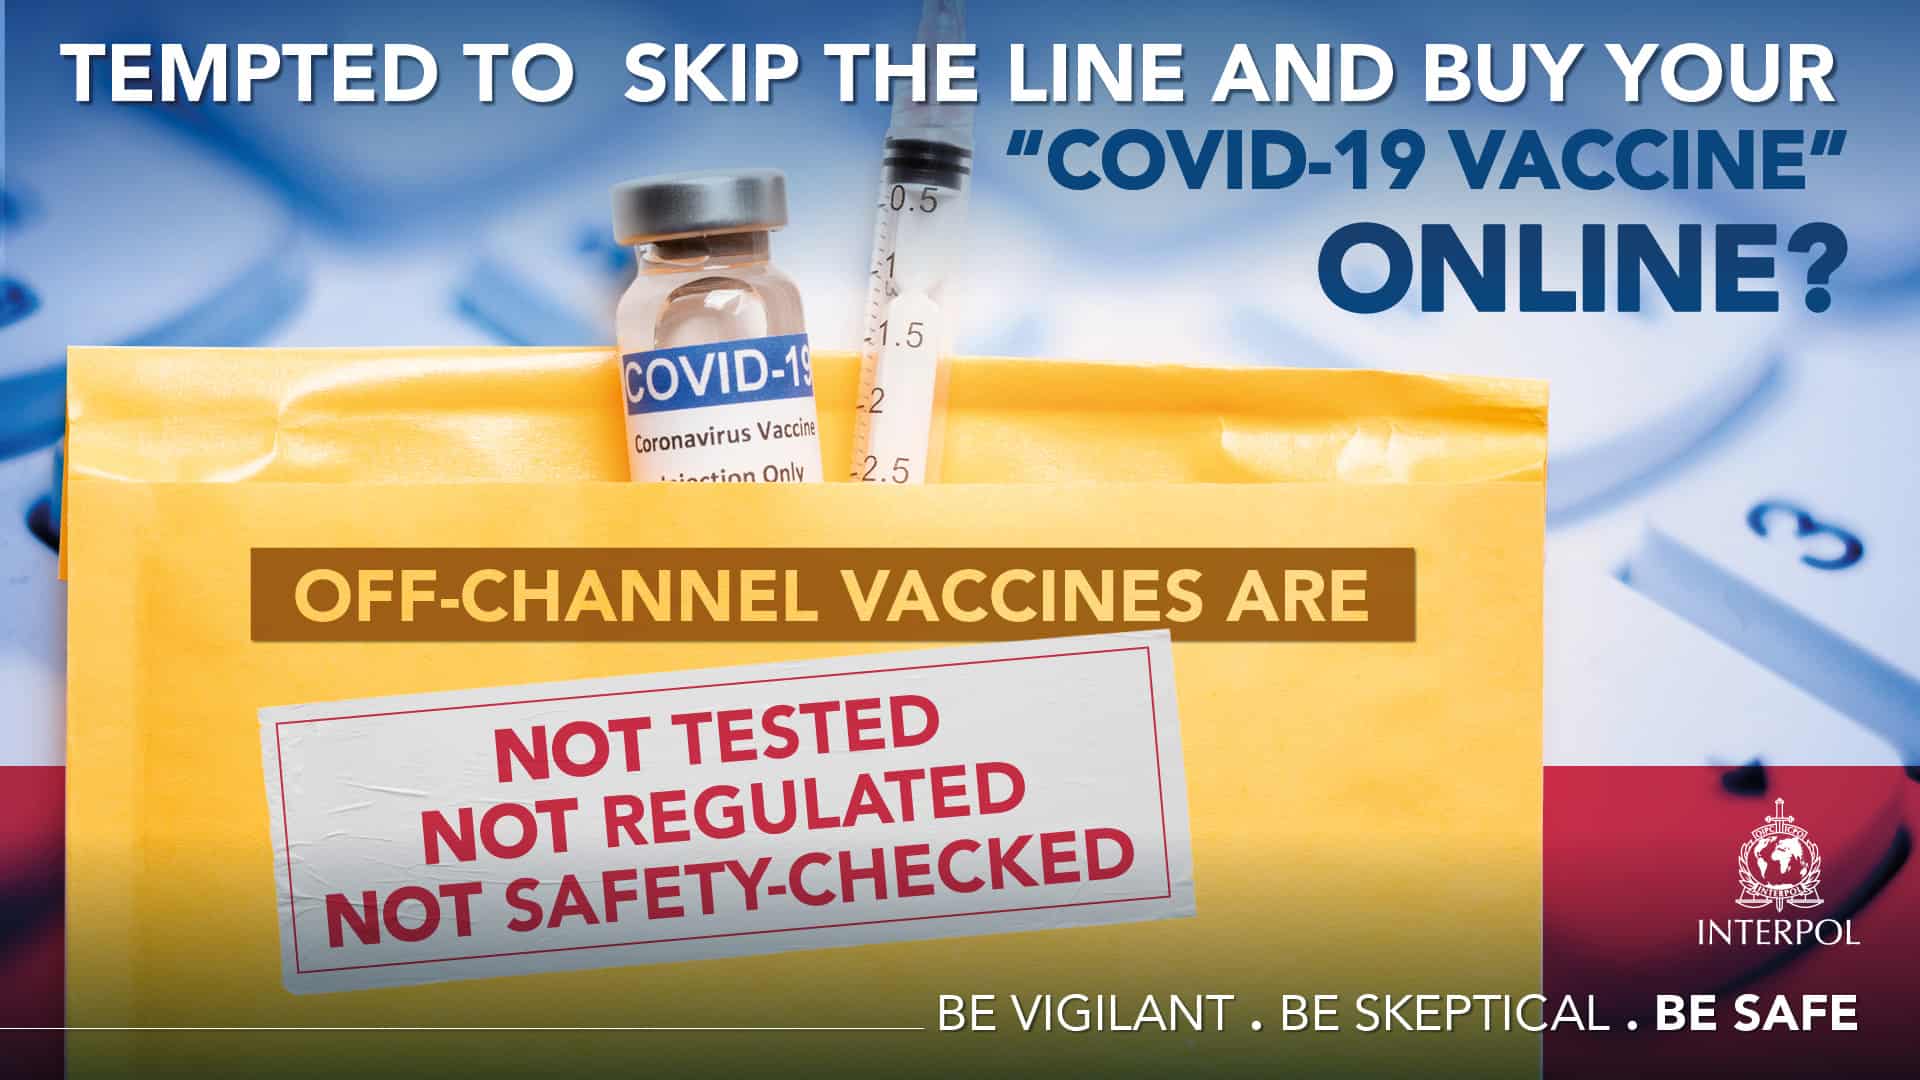 alerta_europol_venda_vacinas_covid19_online_netsegura